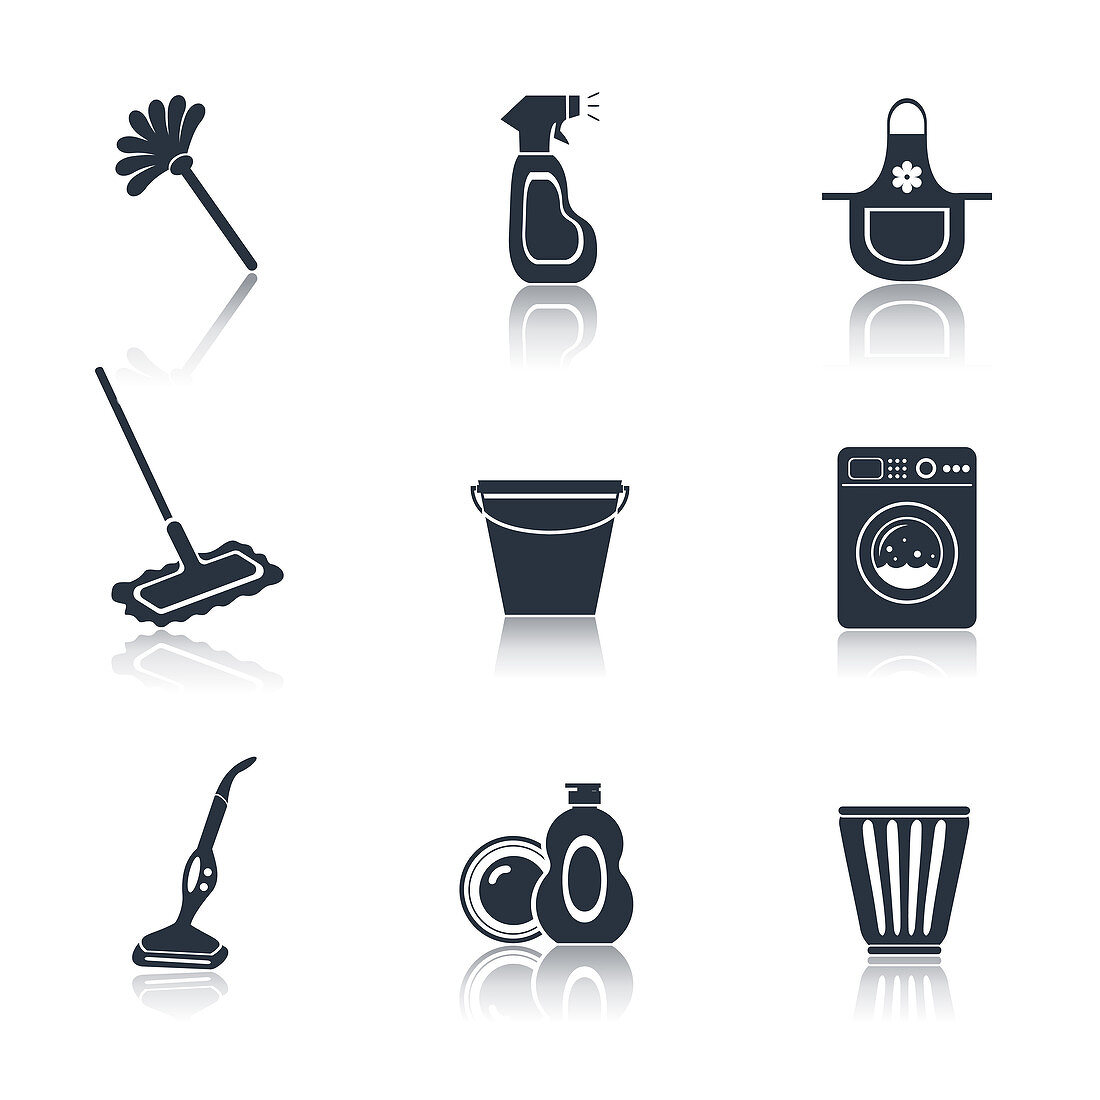 Housework icons, illustration